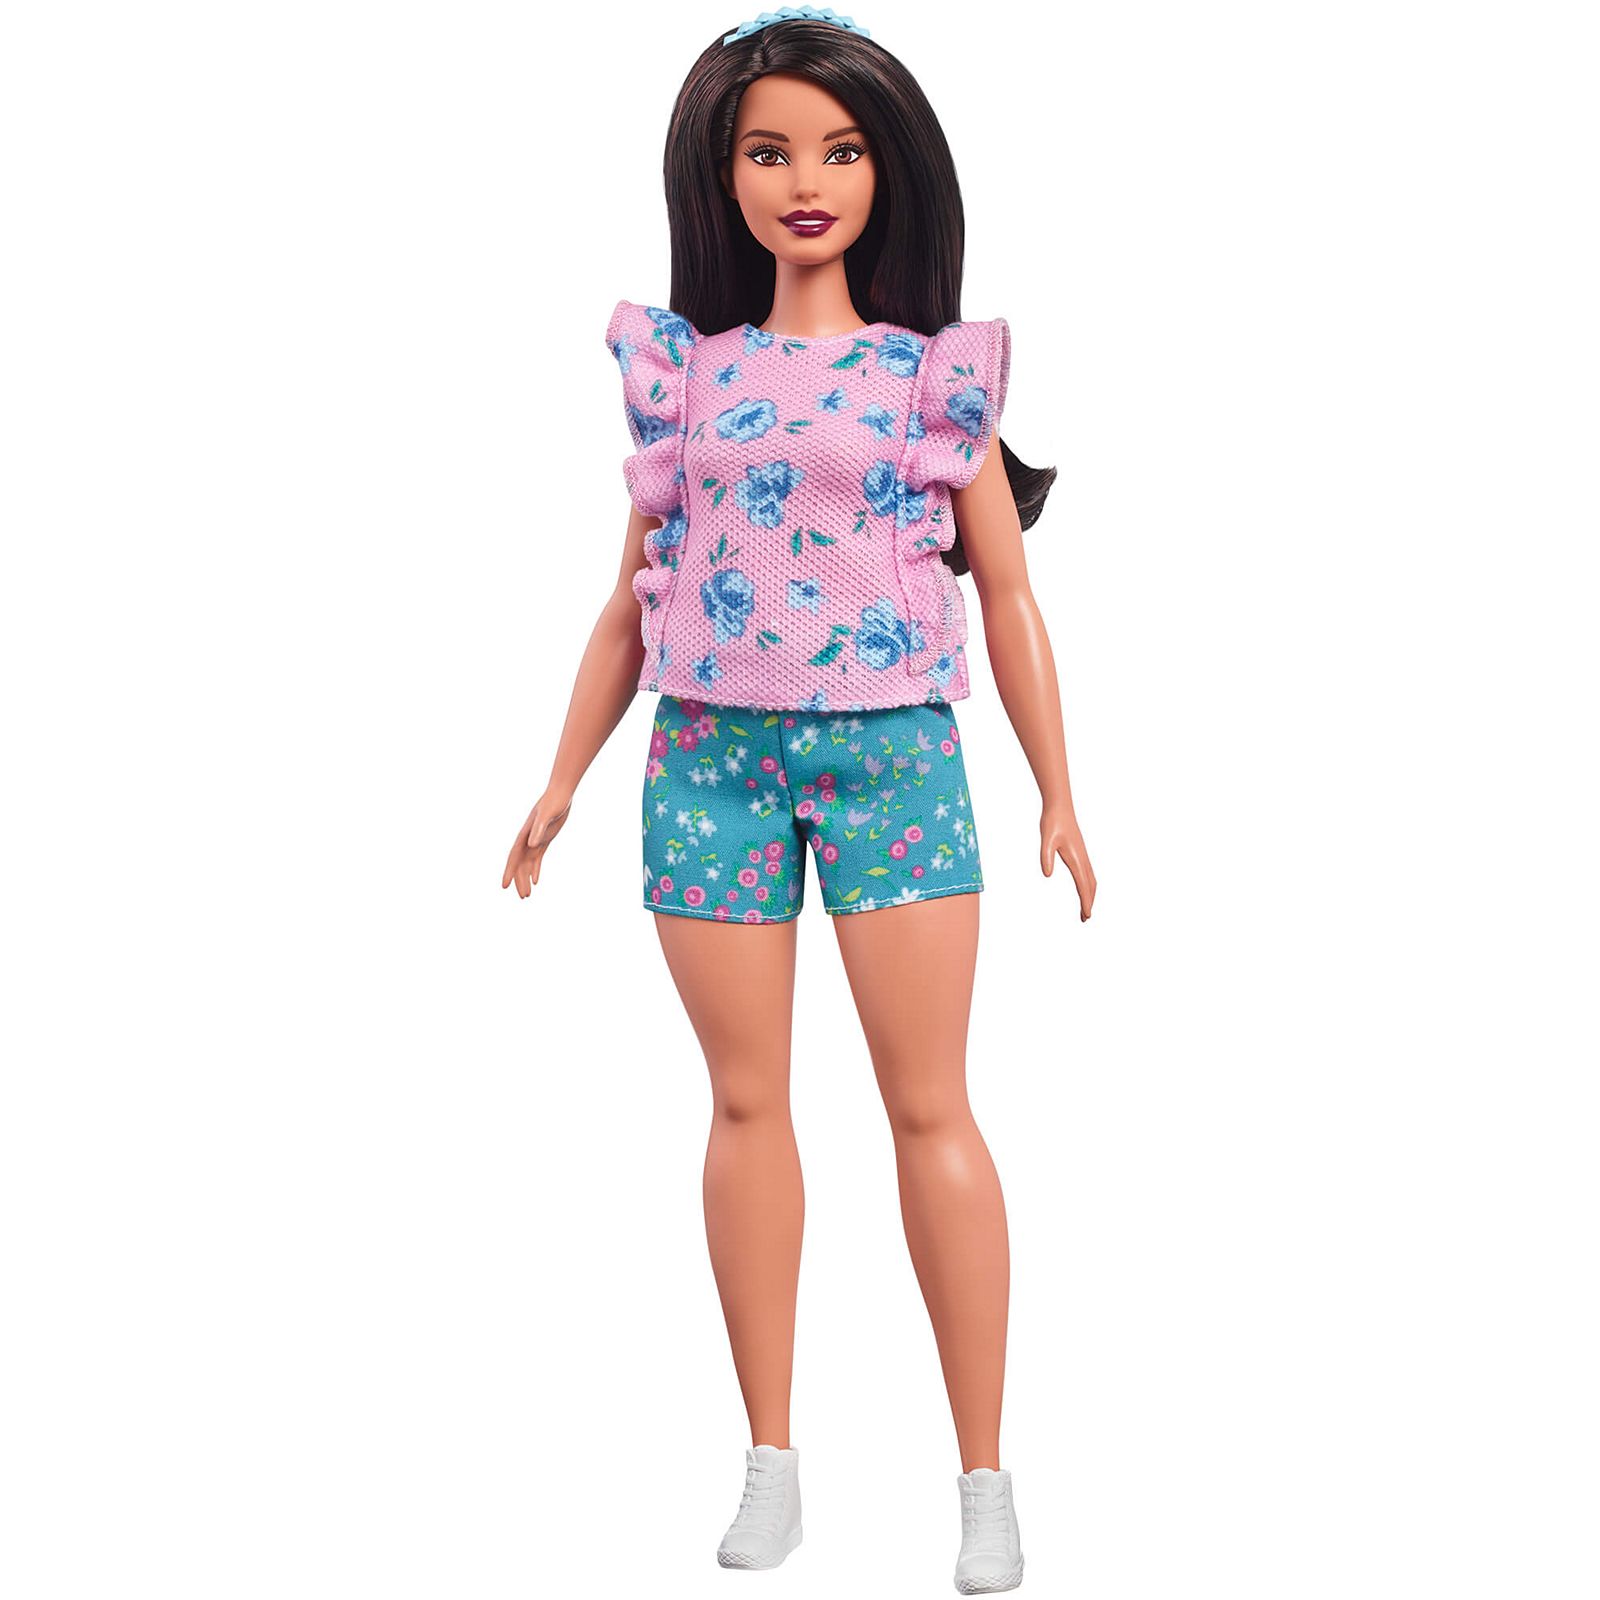 barbie fashionista dolls 2018